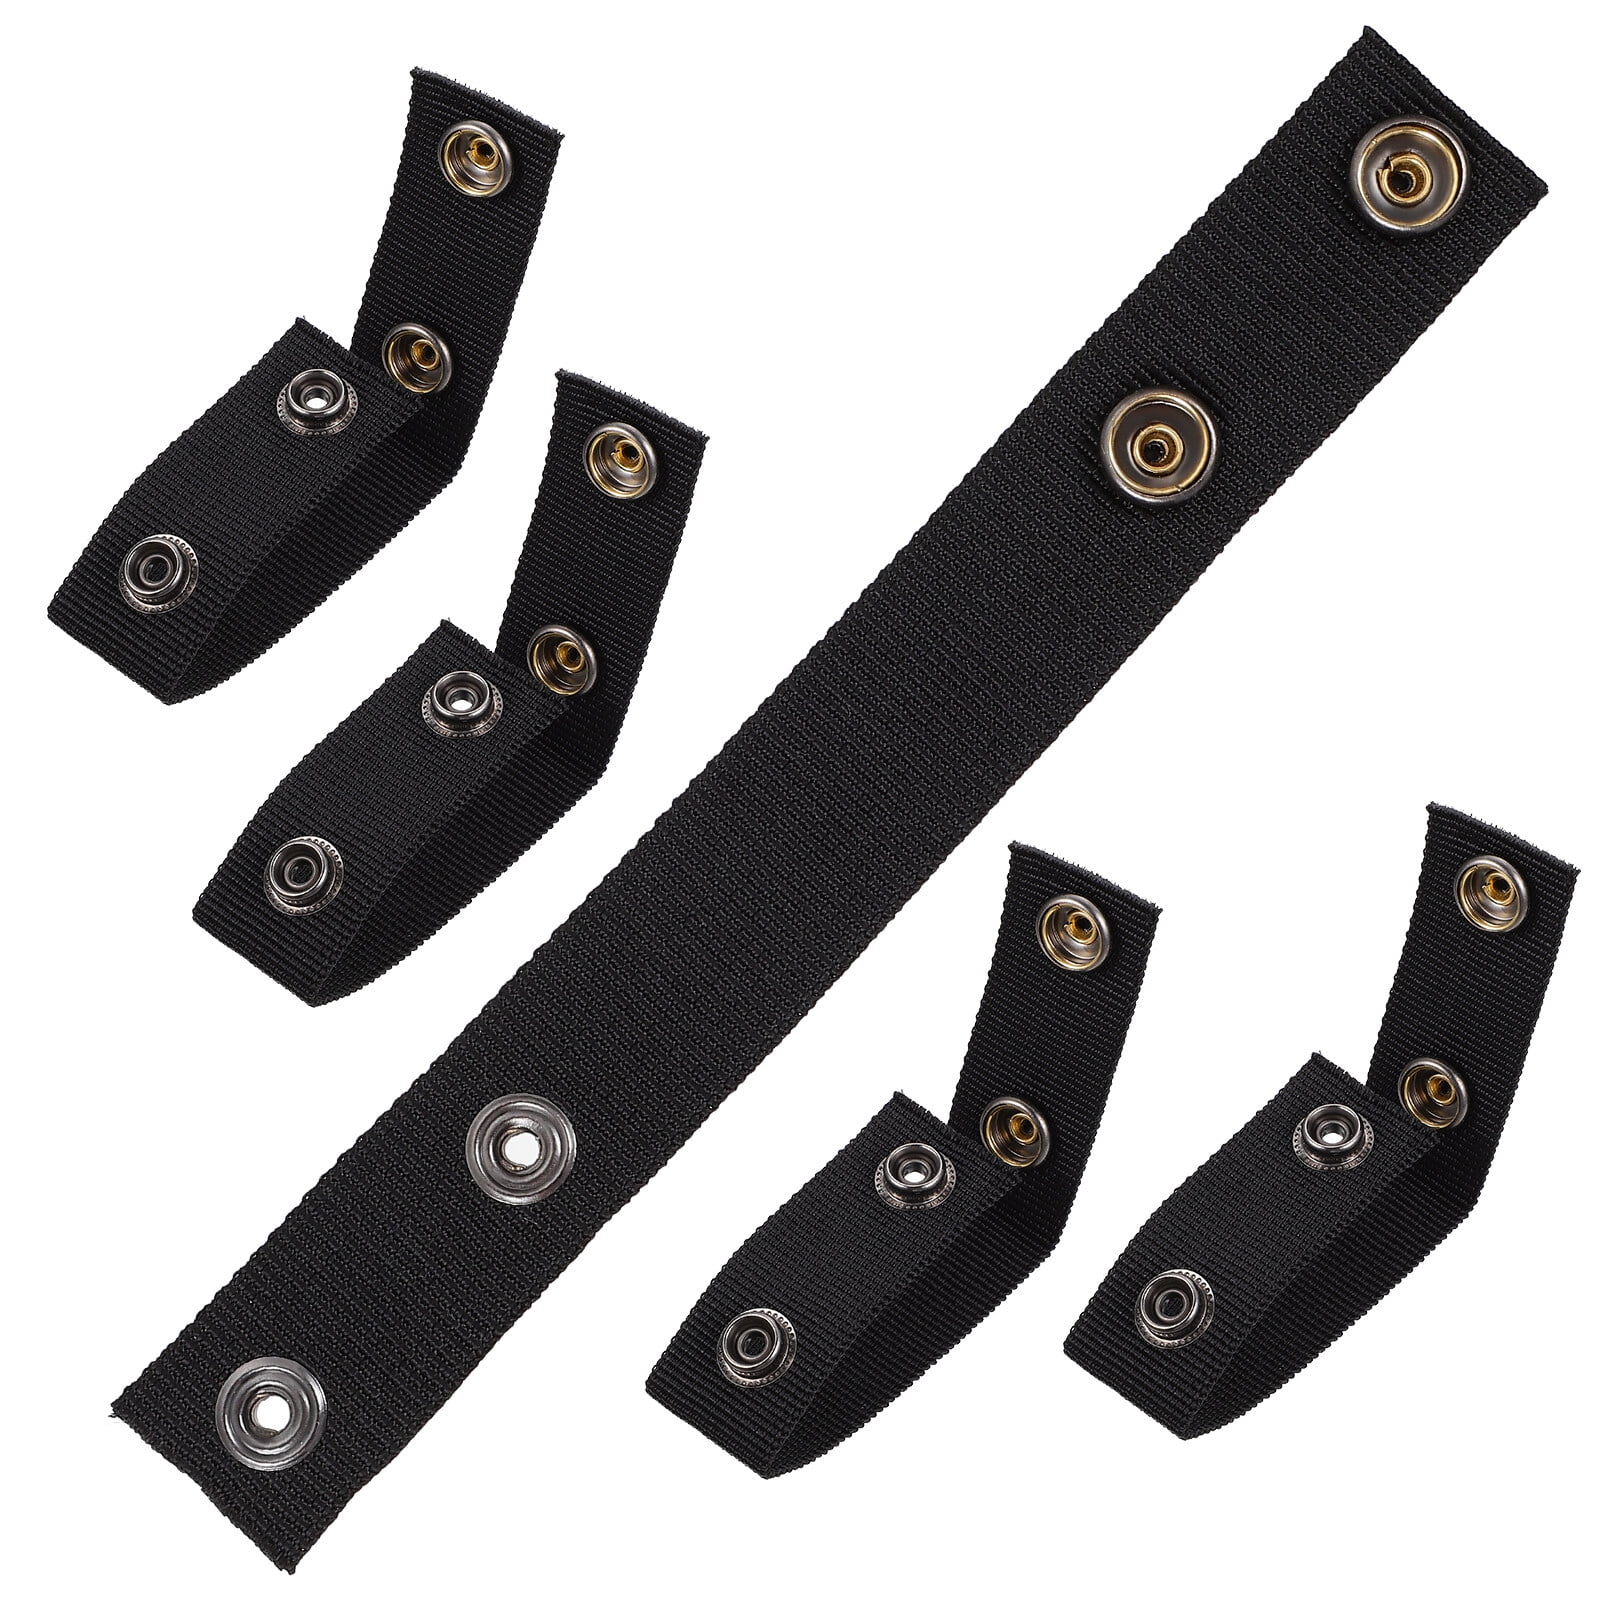  ZGJINLONG Duty Belt Keeper Stays Key Holders Nylon Double  Snaps for 2 Wide Security Police Belt Accessories : Sports & Outdoors